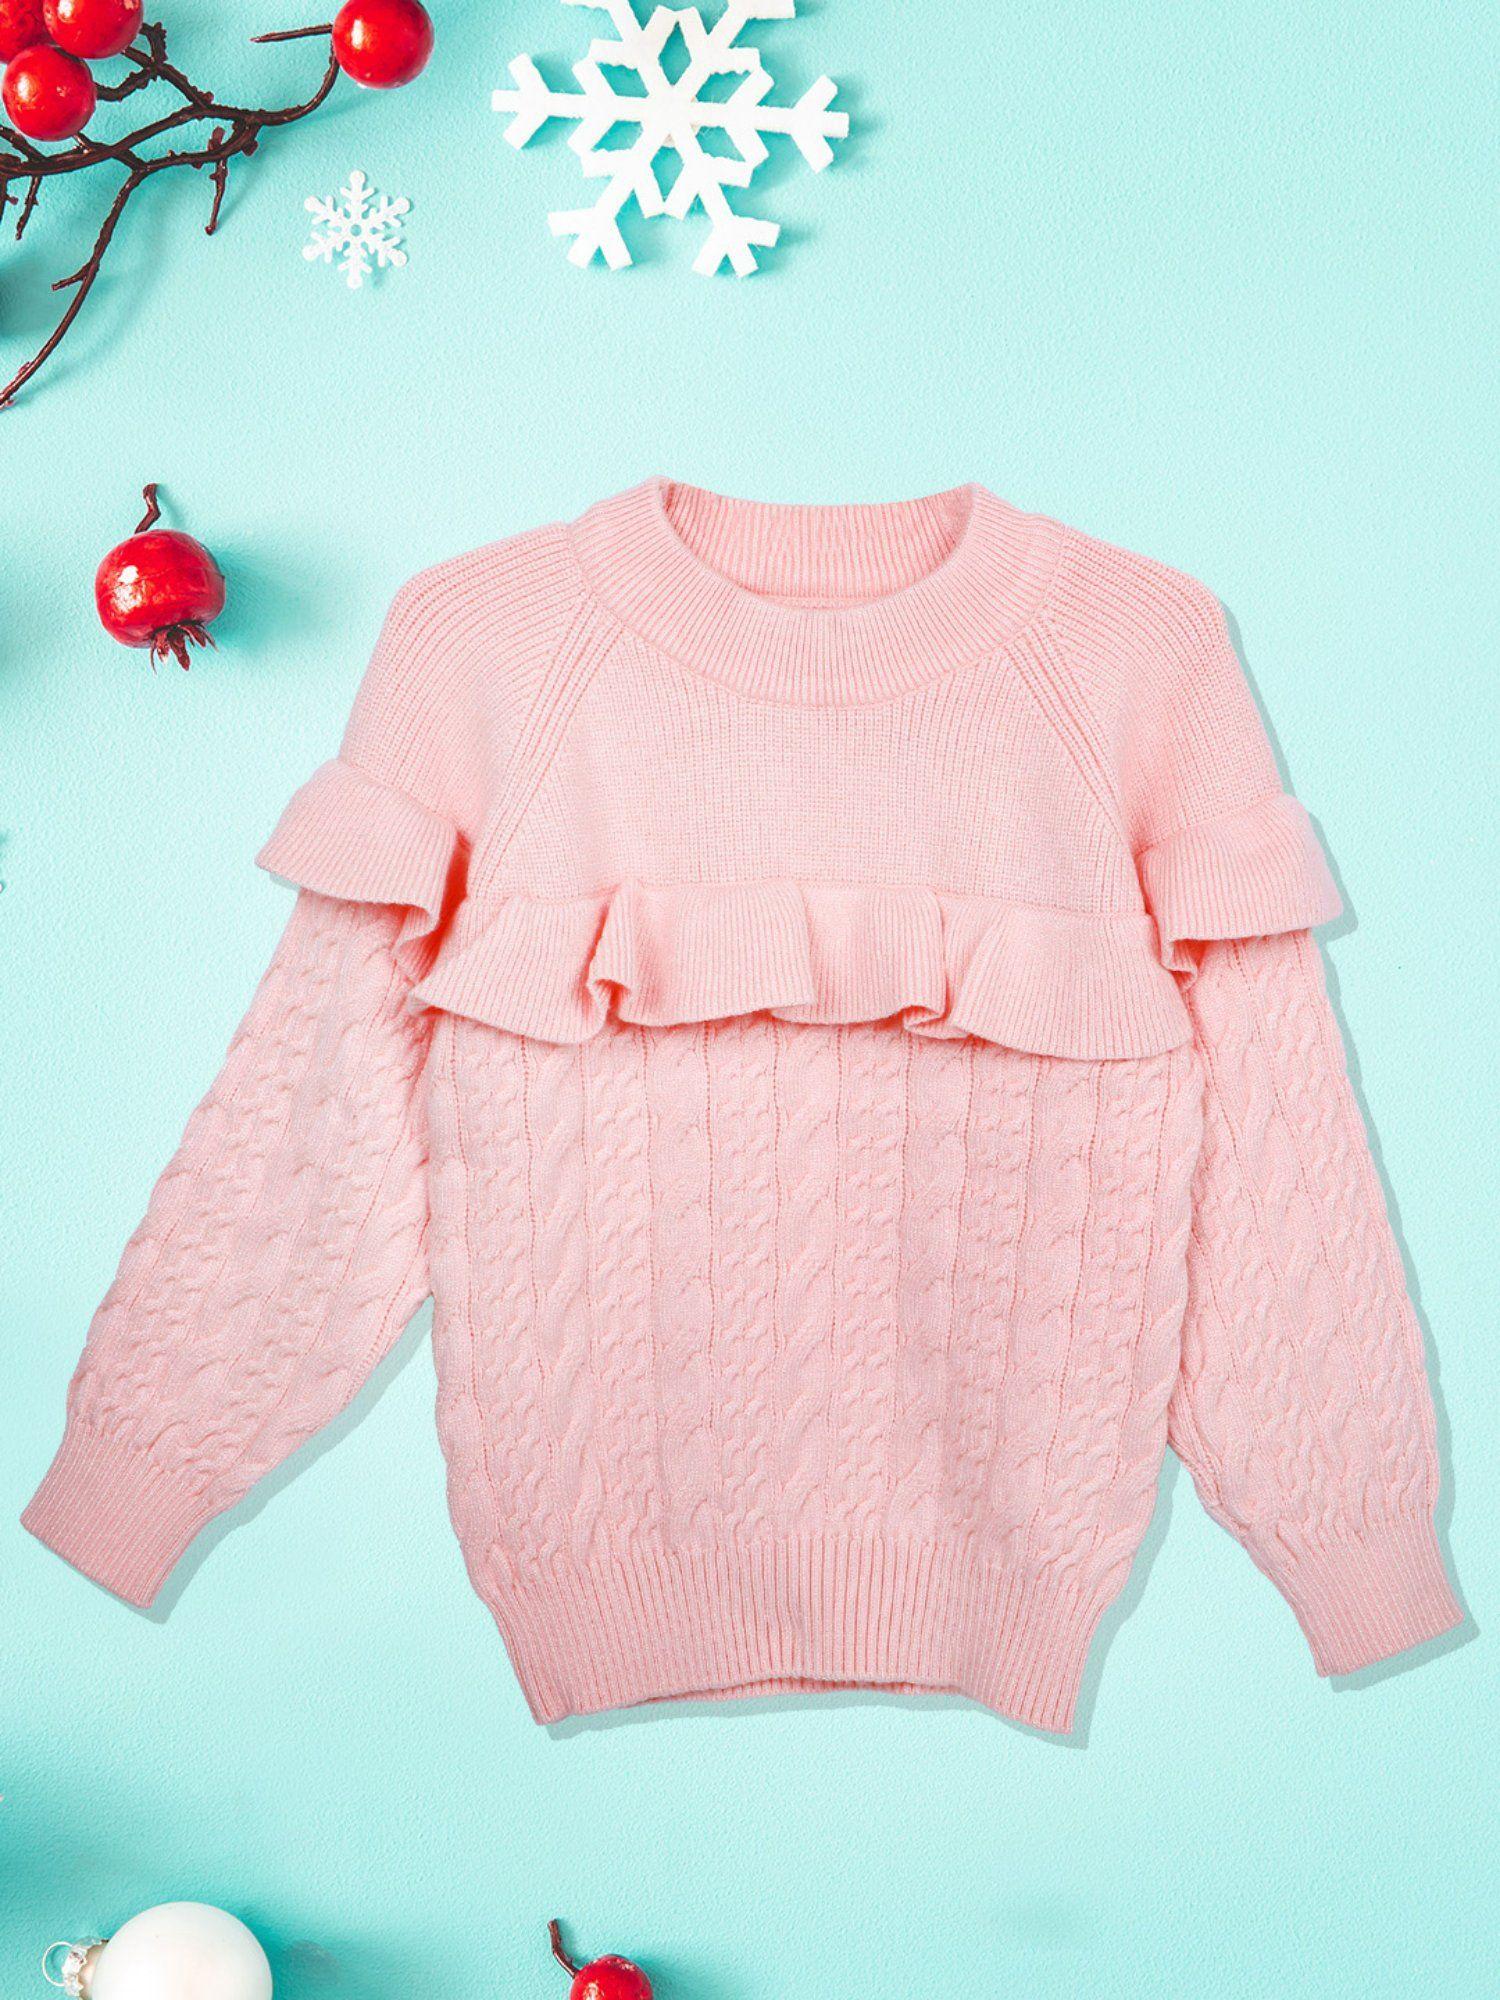 ruffled-jumper-premium-full-sleeves-braided-knit-sweater-pink